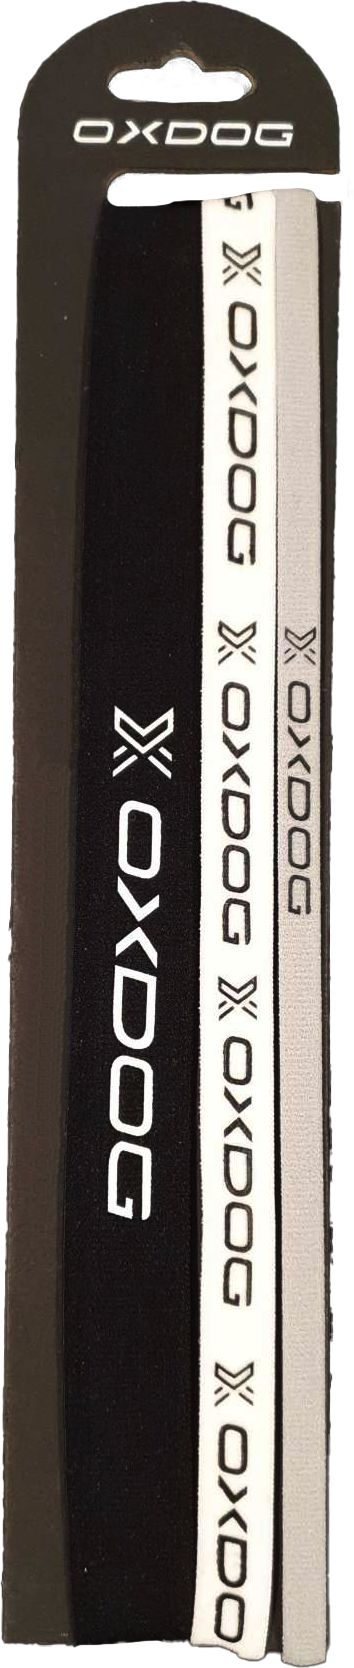 OXDOG, PROCESS HAIRBAND 3 PACK Black/white/grey